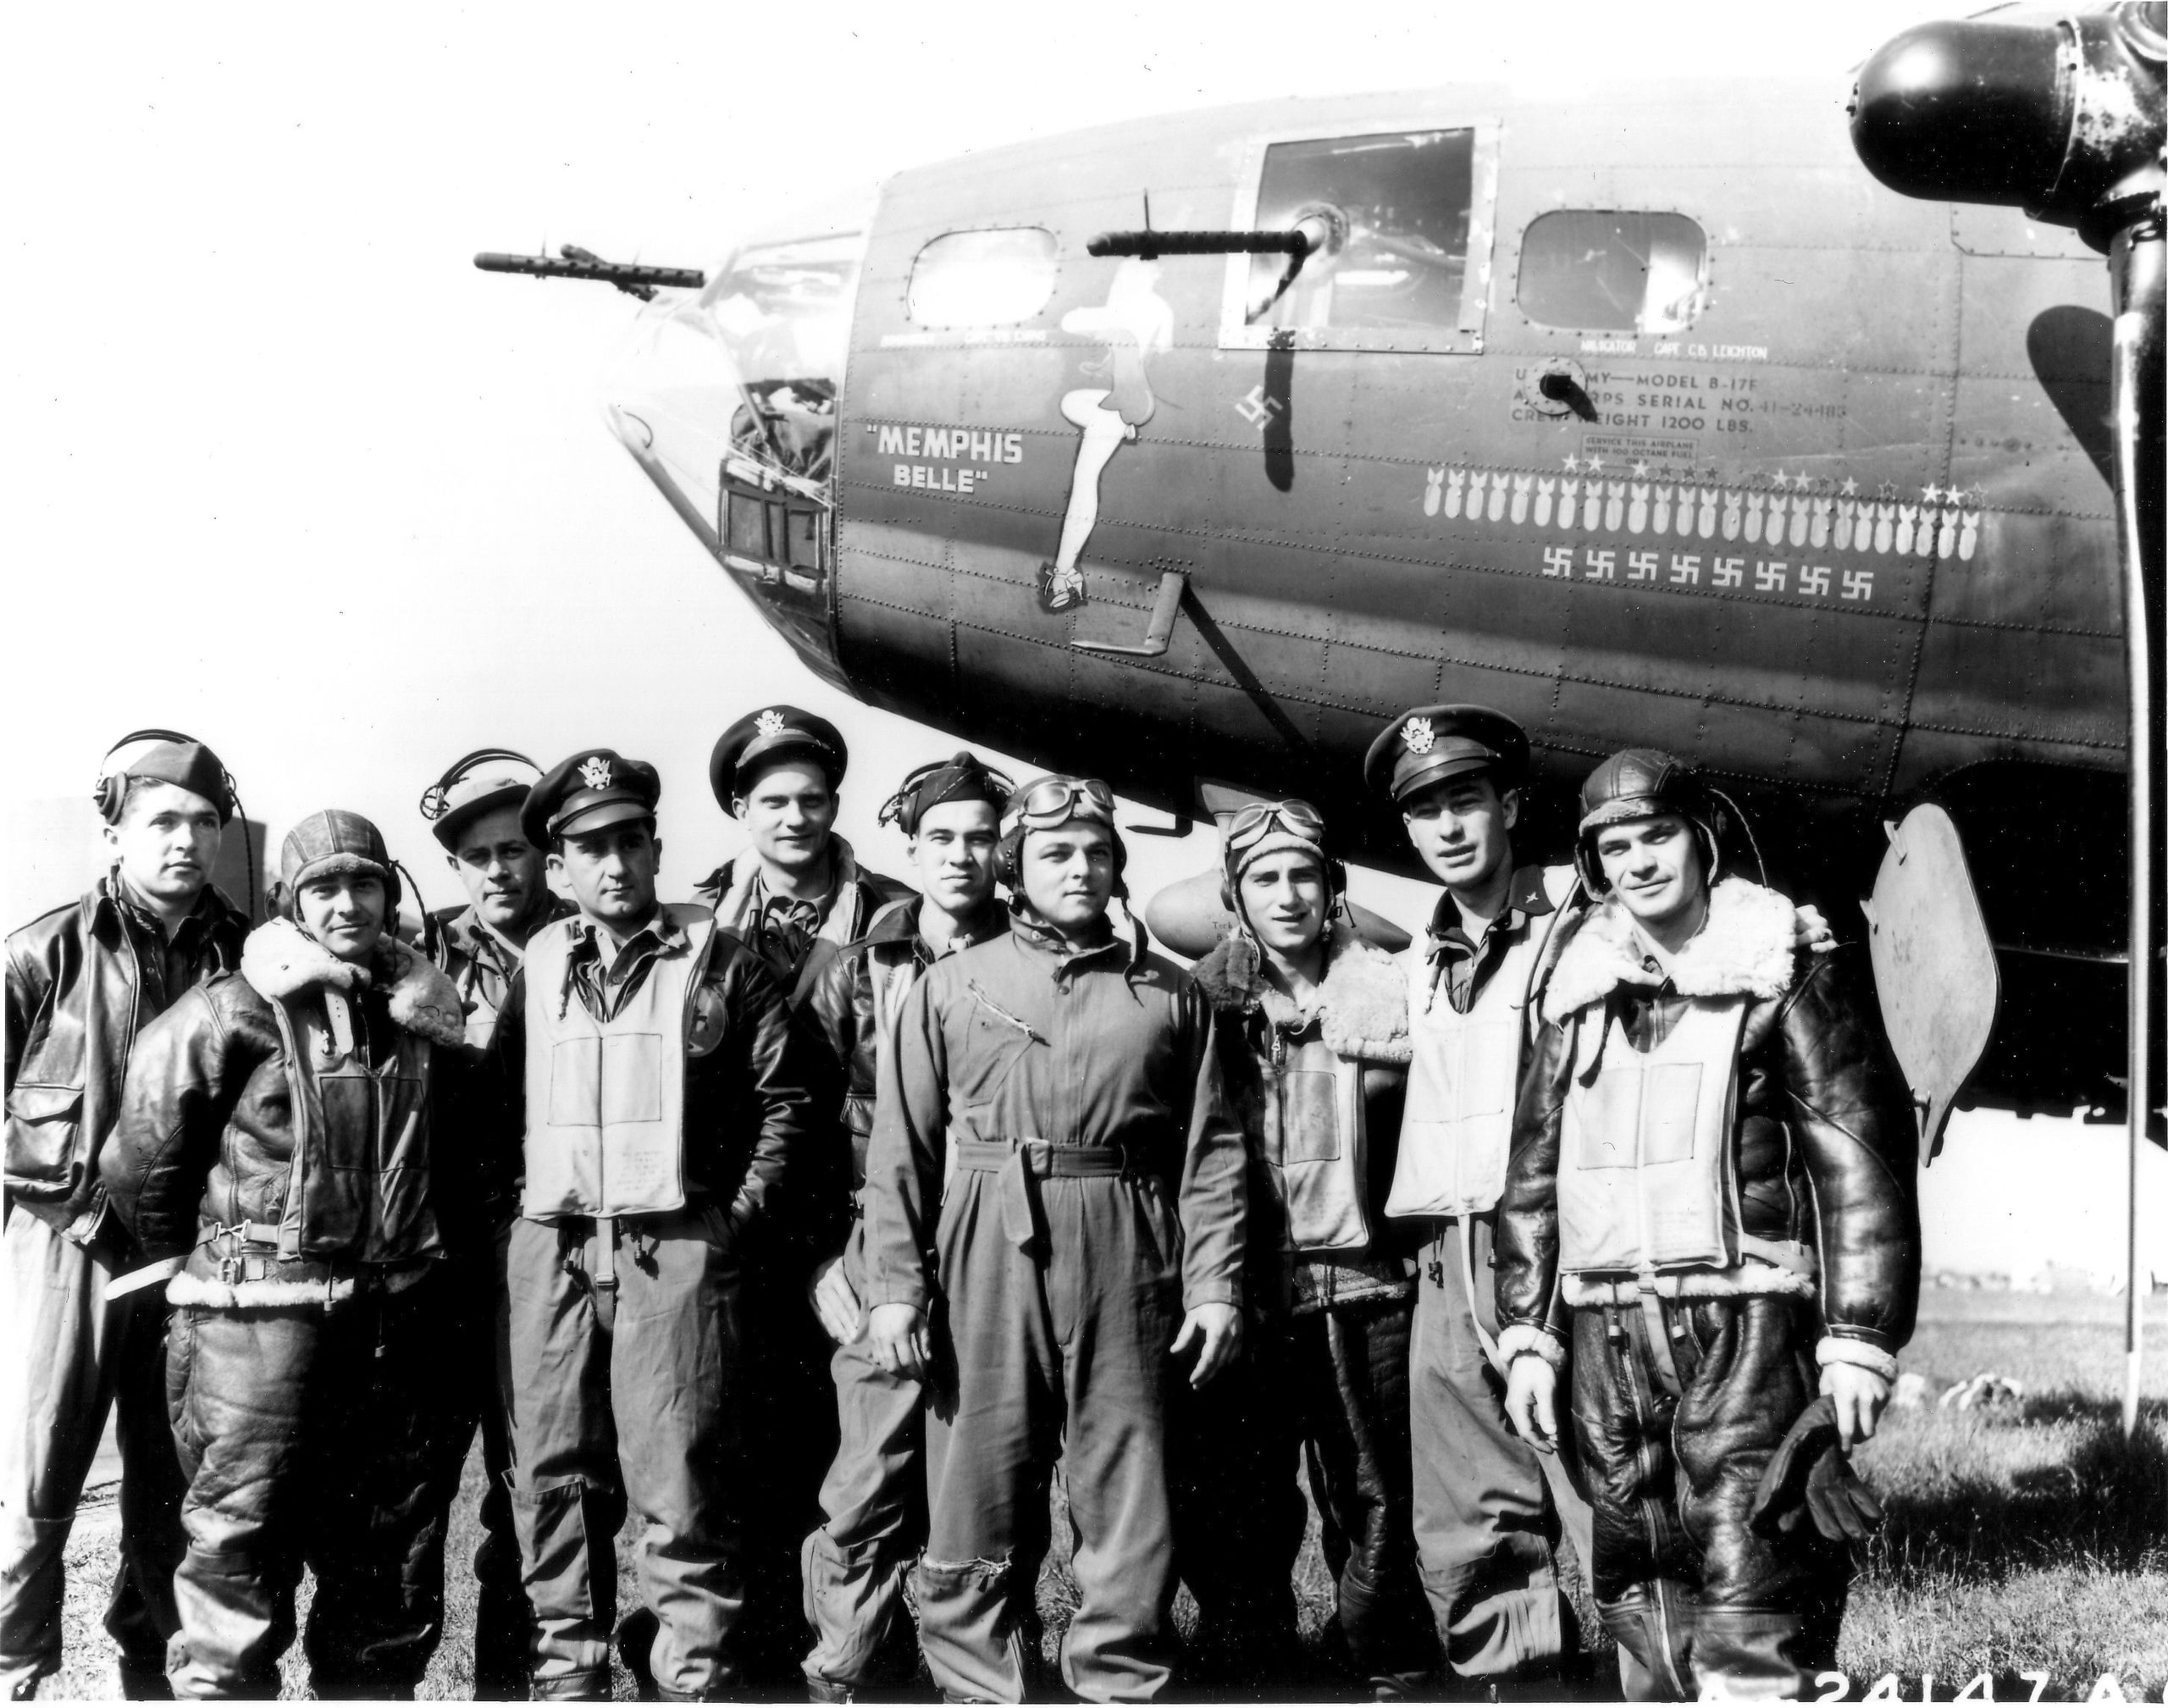 L'equipaggio del Memphis Belle (foto Us Air Force)